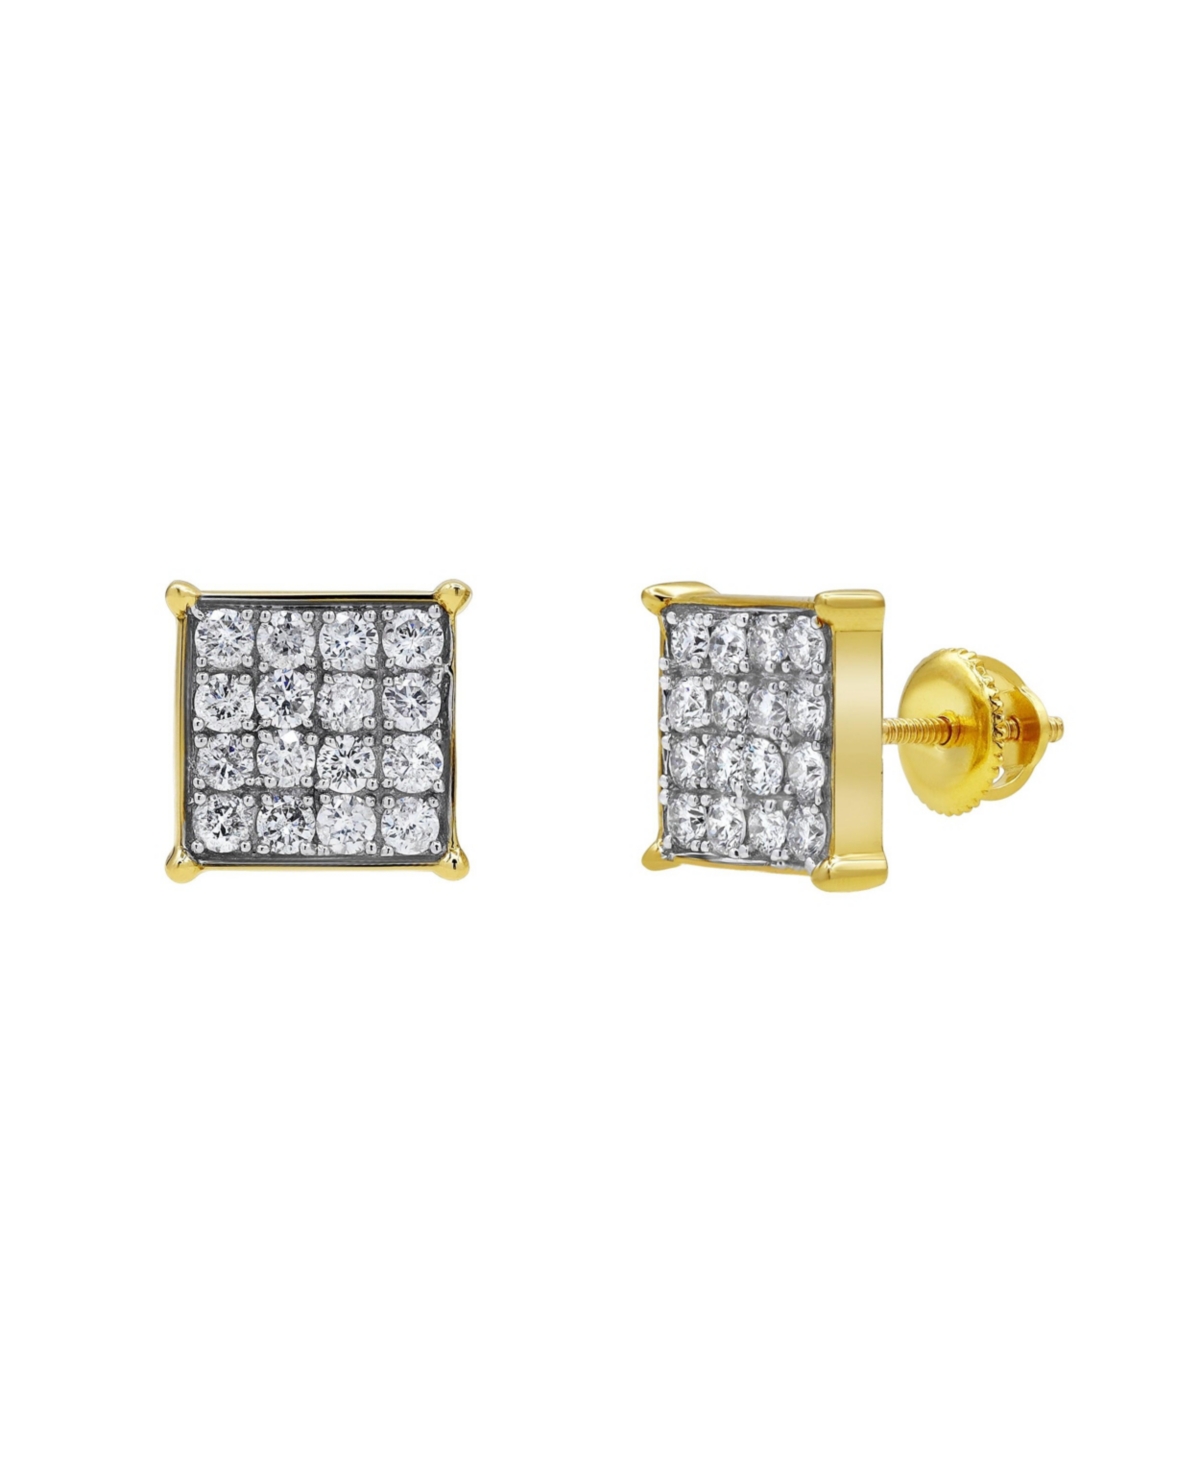 Vip Room 14k Yellow Gold 0.70 cttw Certified Natural Diamond Stud Earring for Men/Women, Screw Back - Yellow